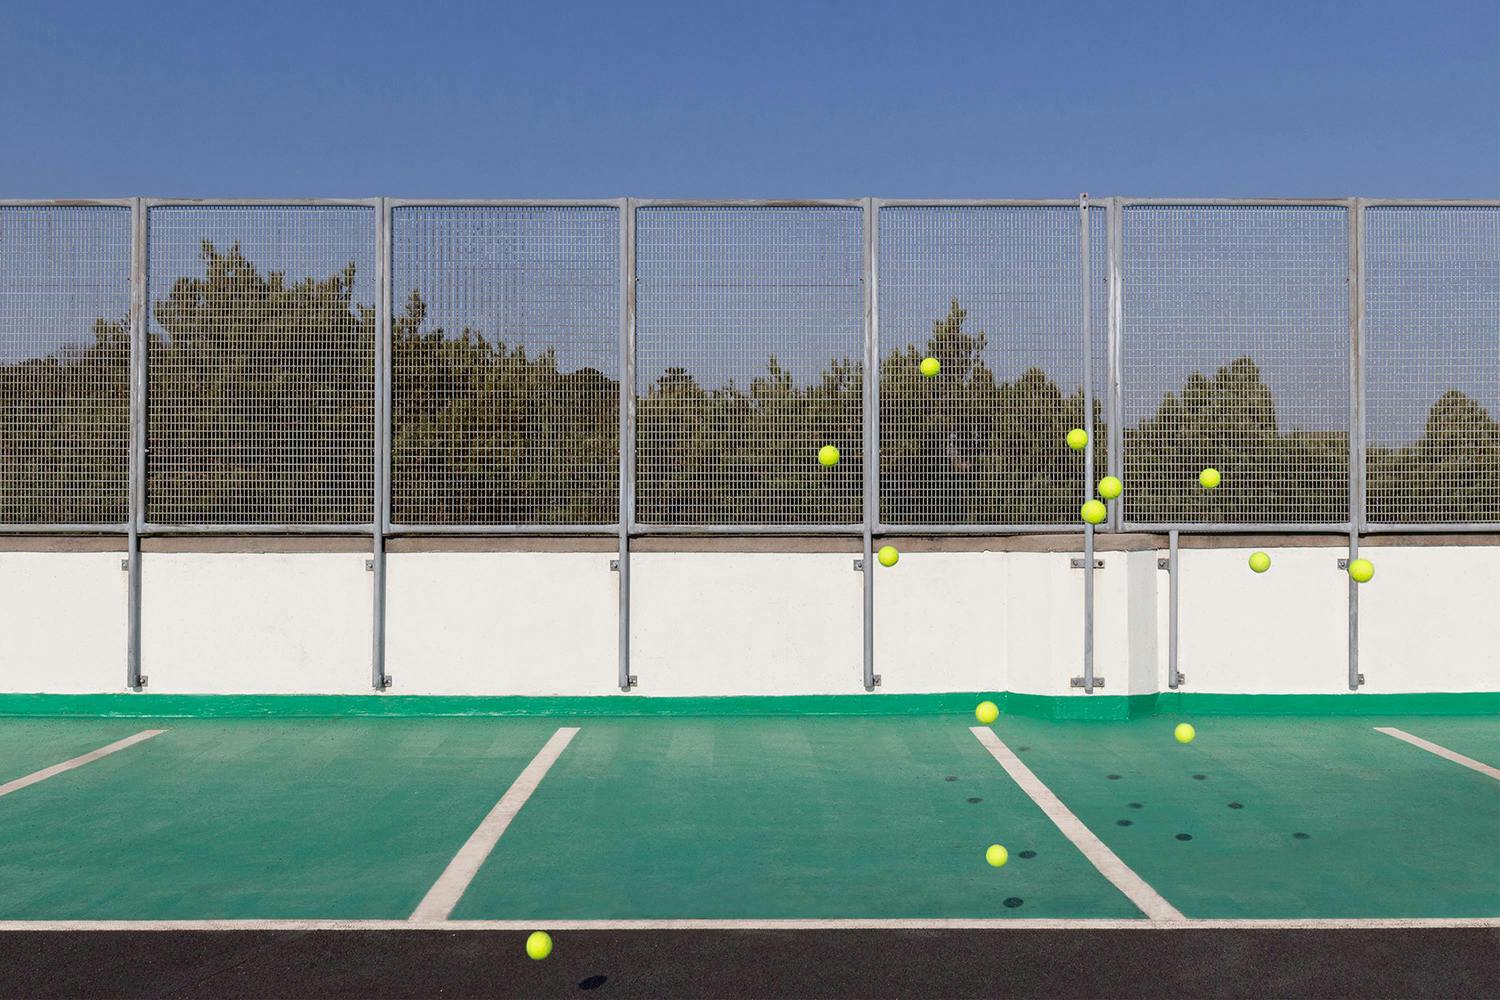 Tennis balls floating on a tennis court